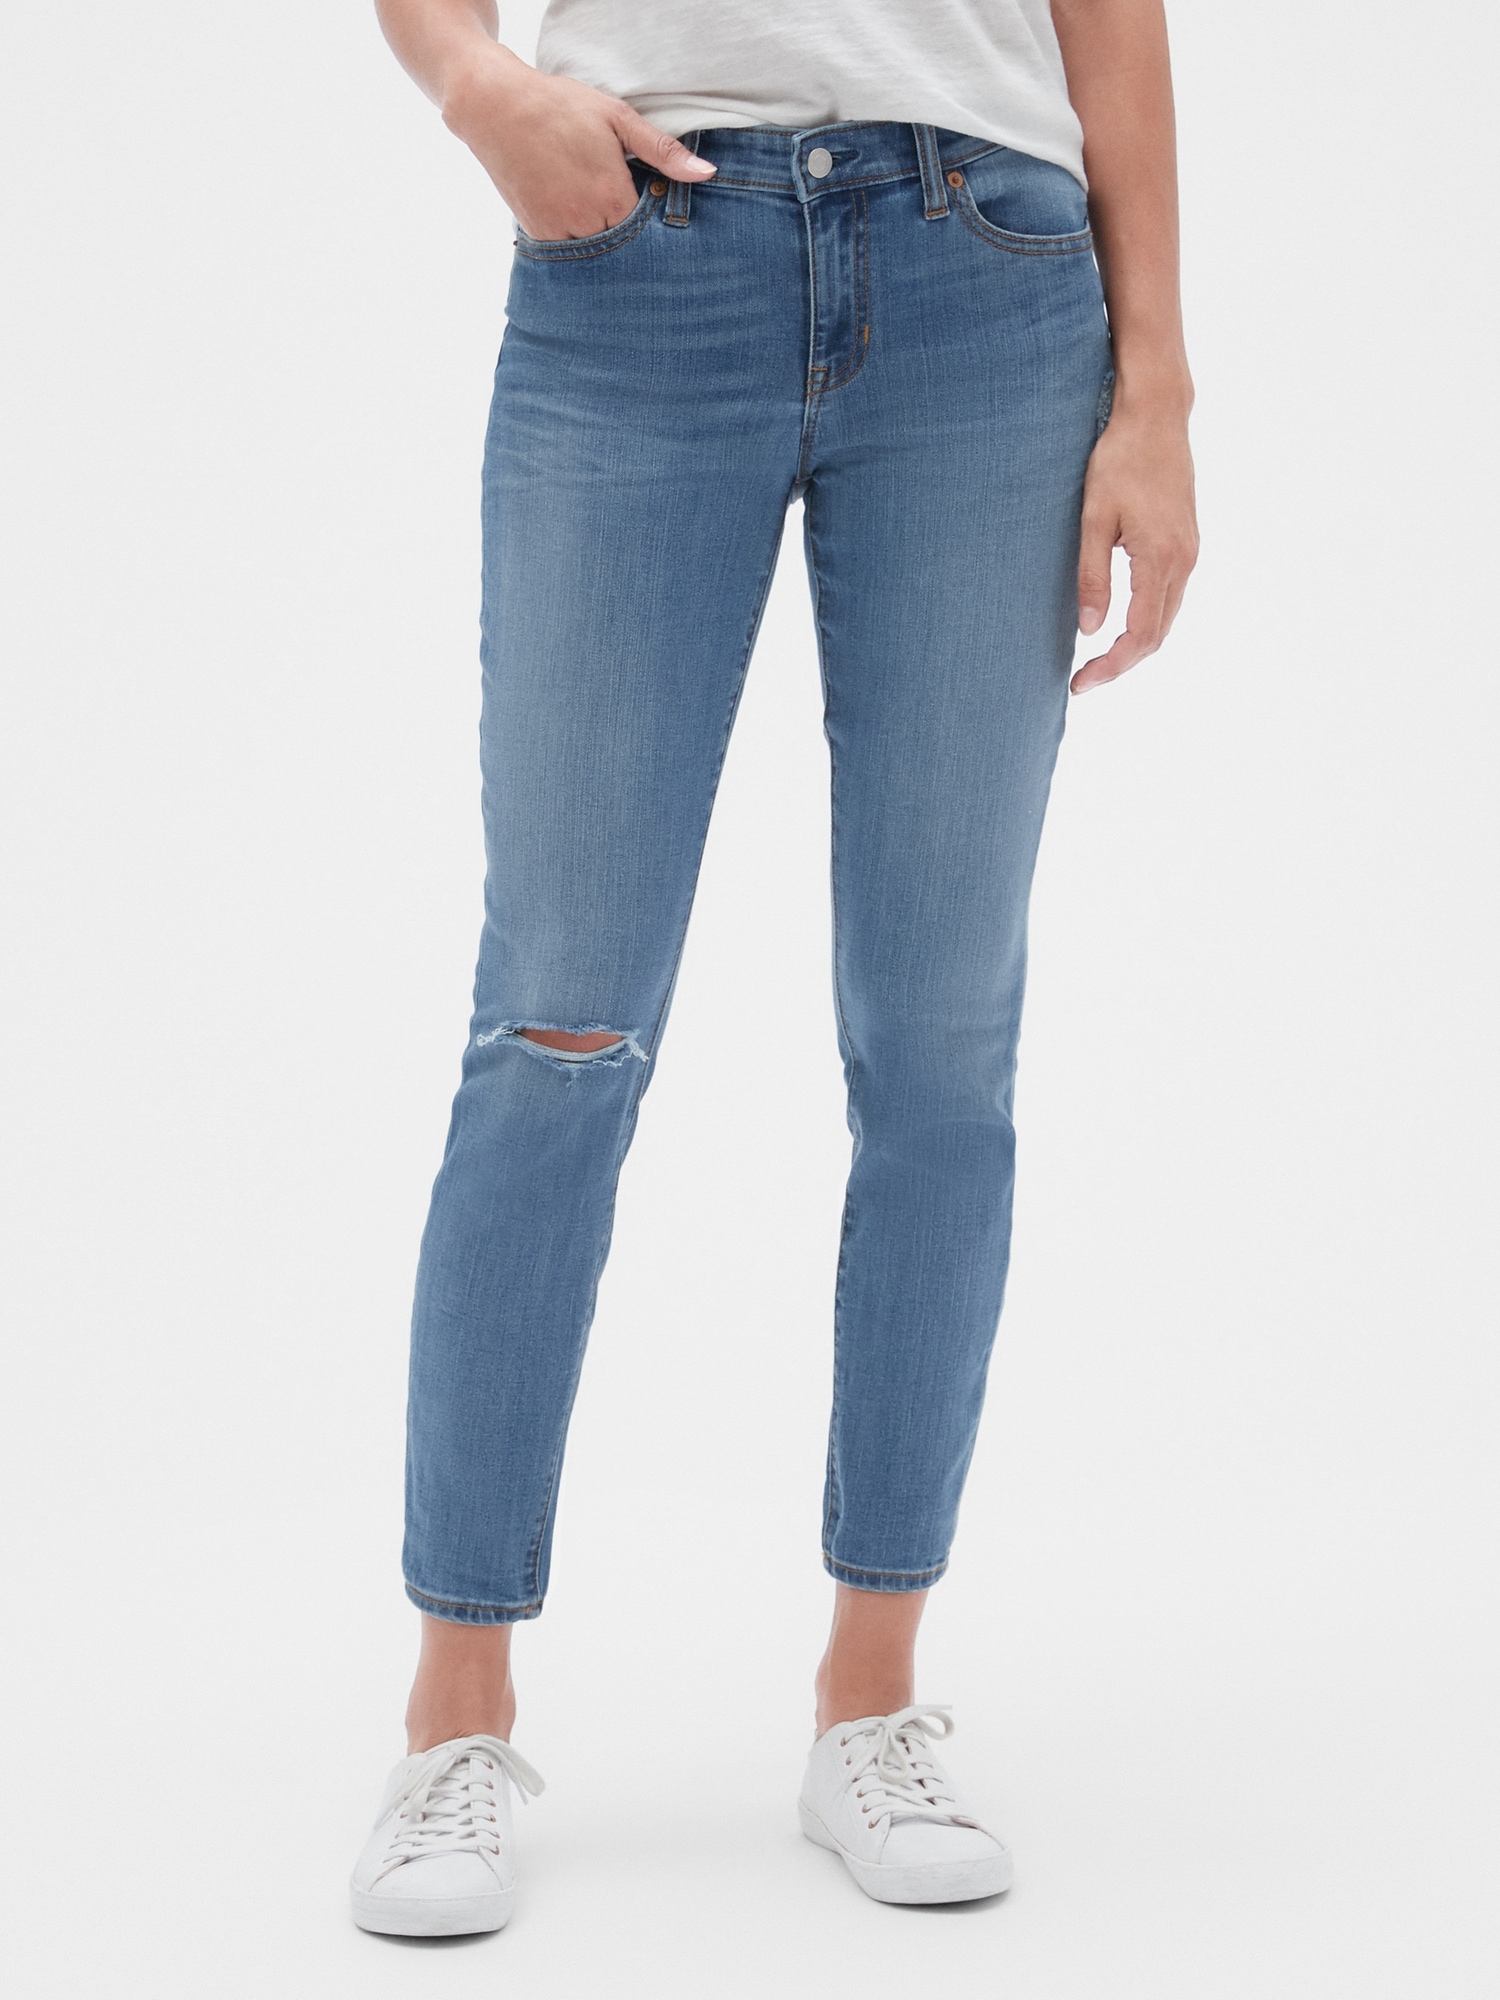 gap skimmer jeans